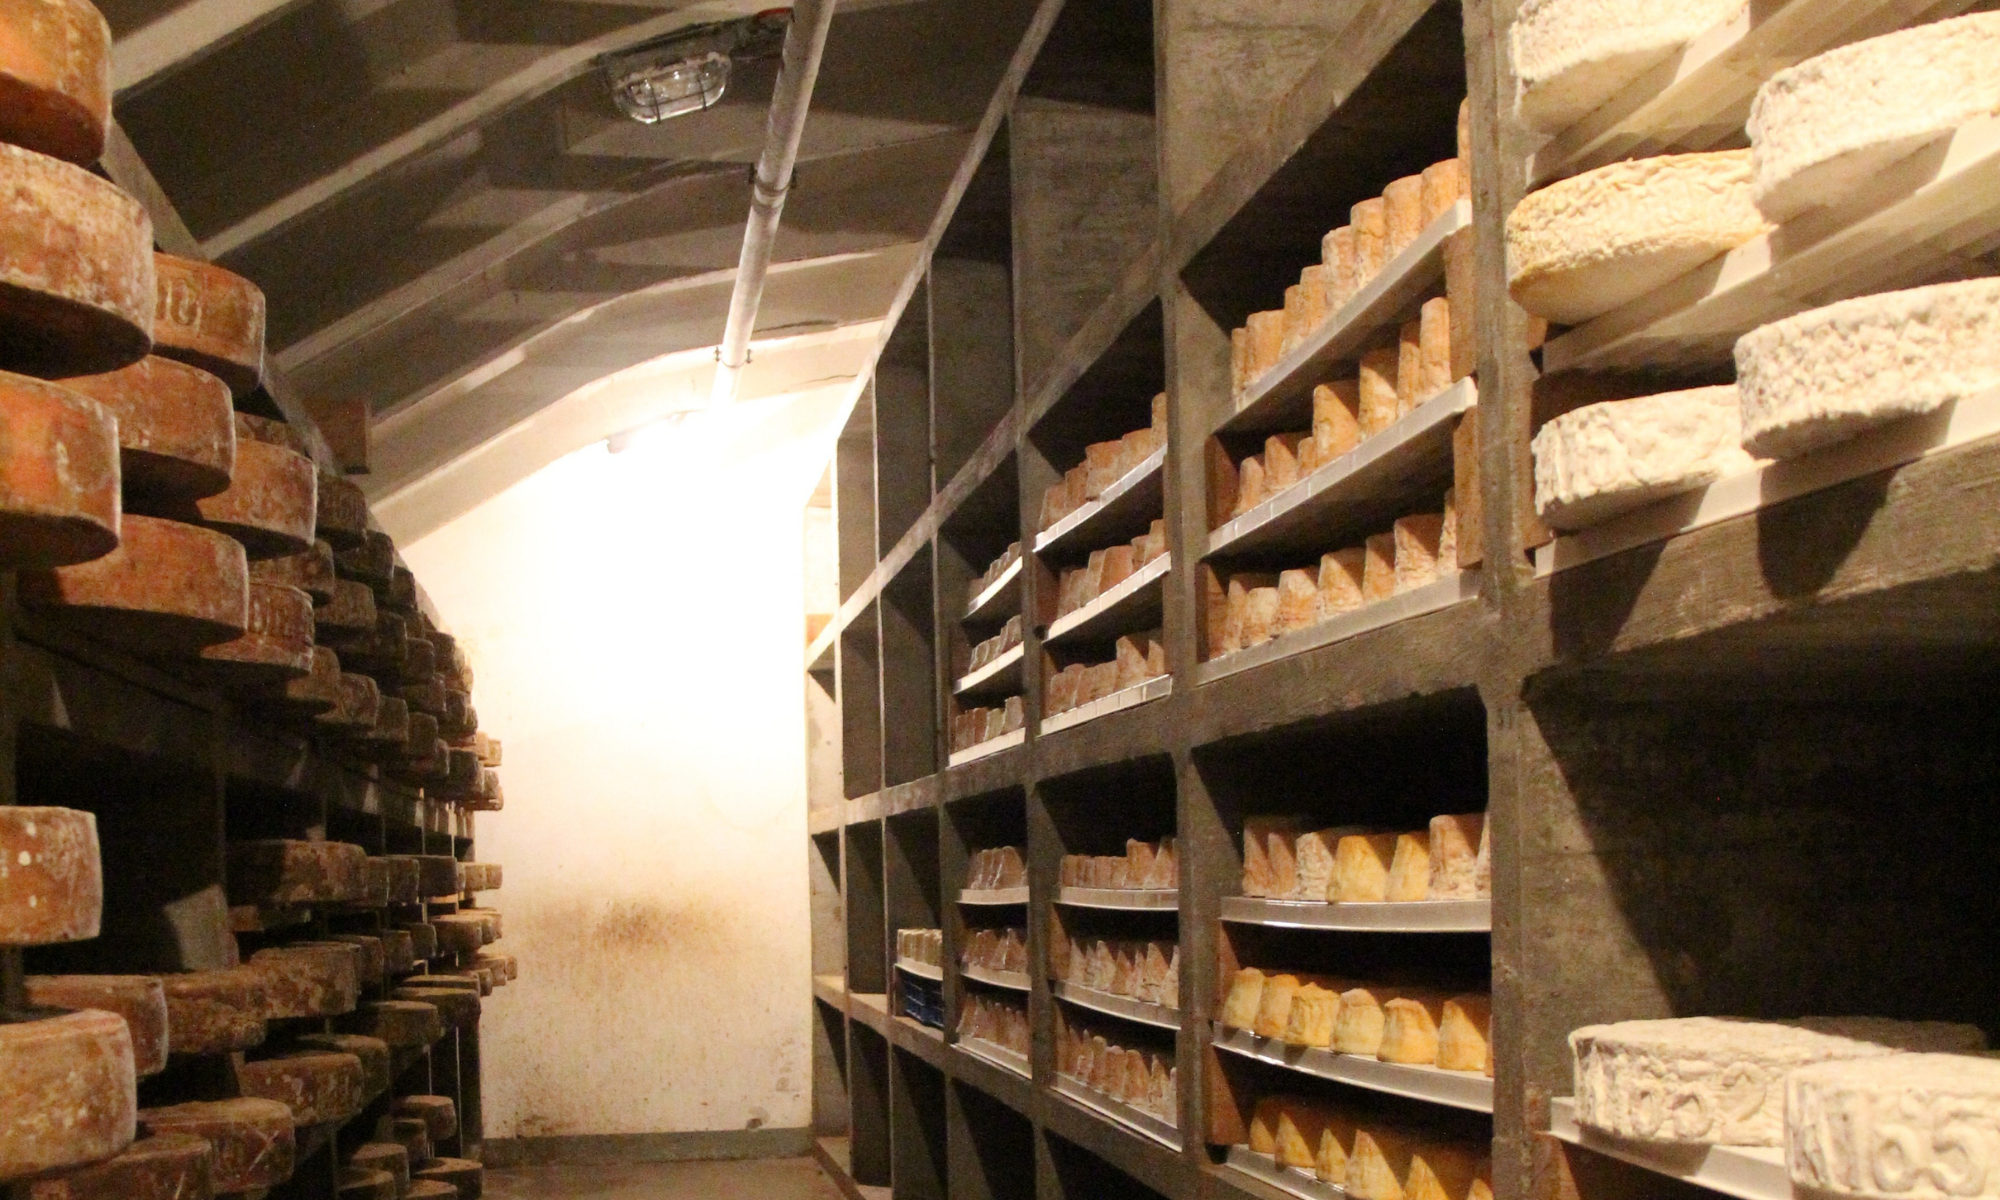 Forts de la tine - Cheese maturing - Book 111 places in the Vaud Alps - Pays-d'Enhaut - no season - Marc Voltenauer & Benjamin Amiguet